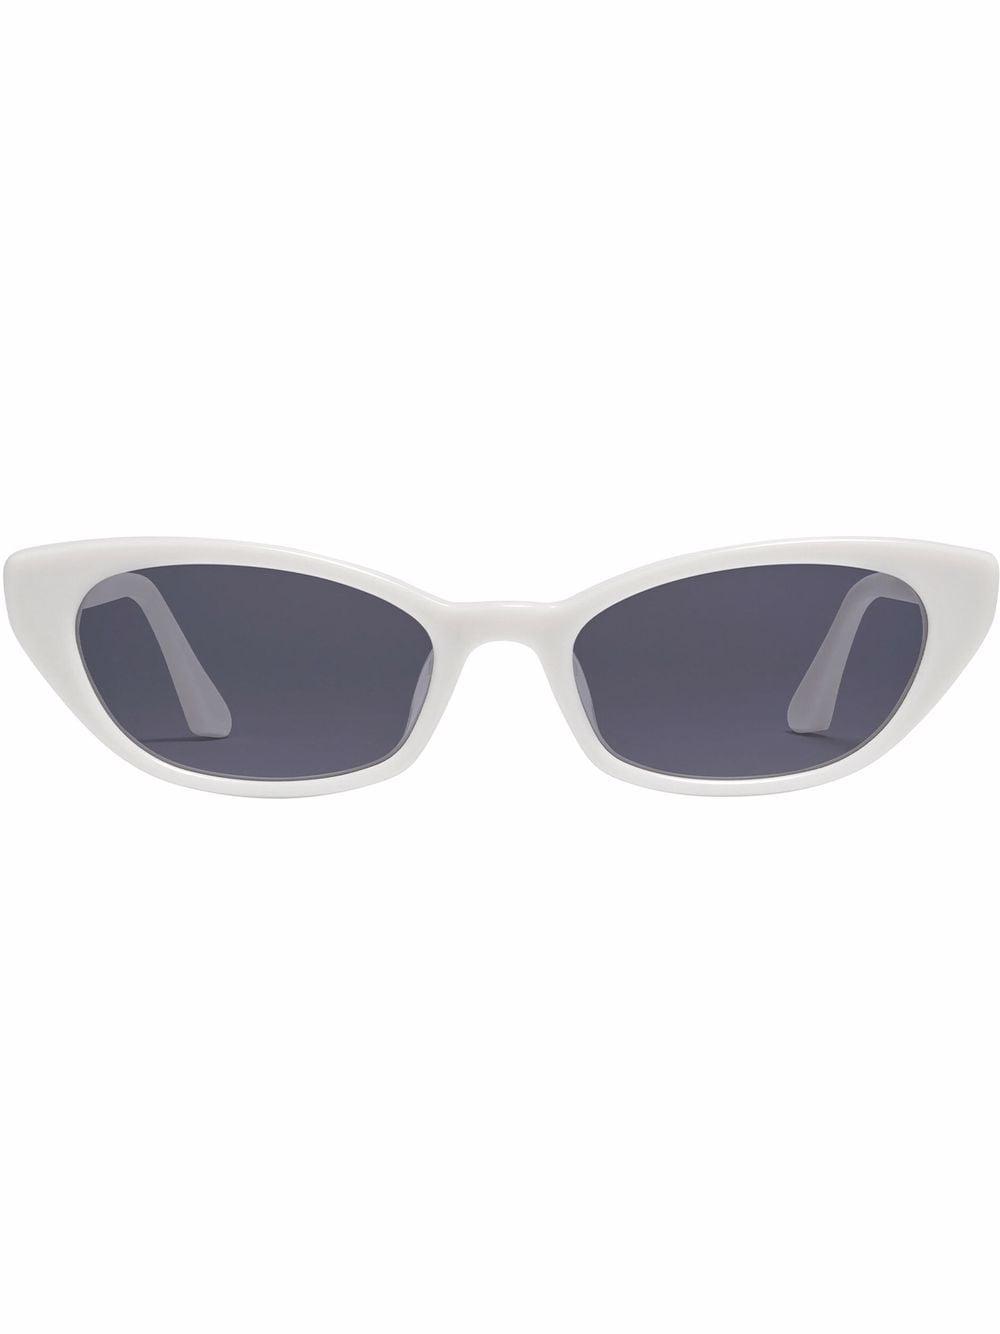 Blue Pesh G7 tinted cat eye sunglasses Farfetch Accessories Sunglasses Cat Eye Sunglasses 